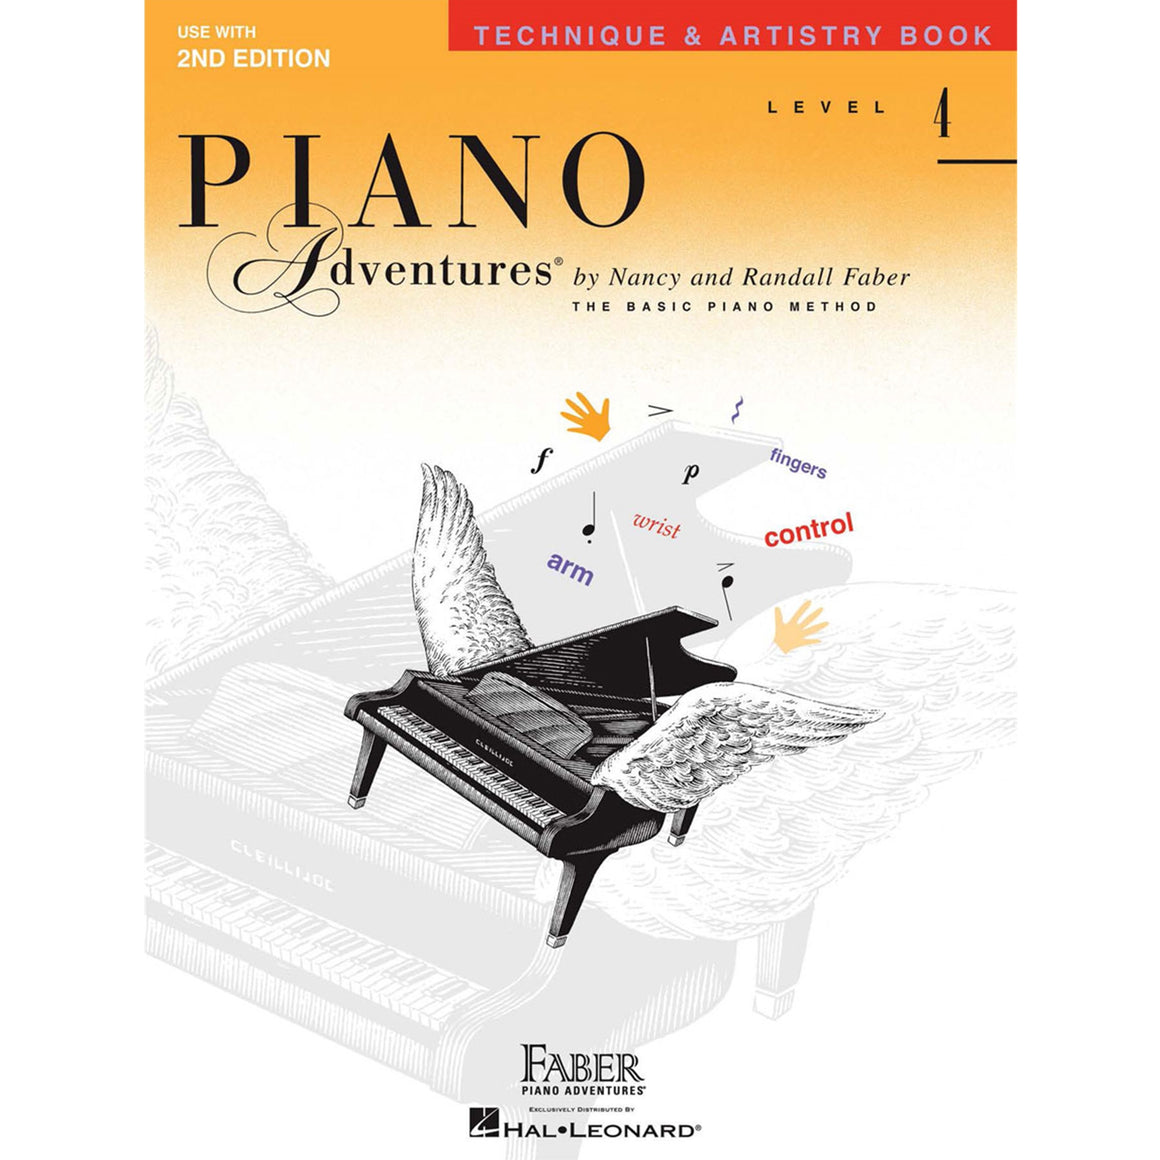 FJH PUBLISHER 420339 Piano Adventures Level 4 – Technique & Artistry Book